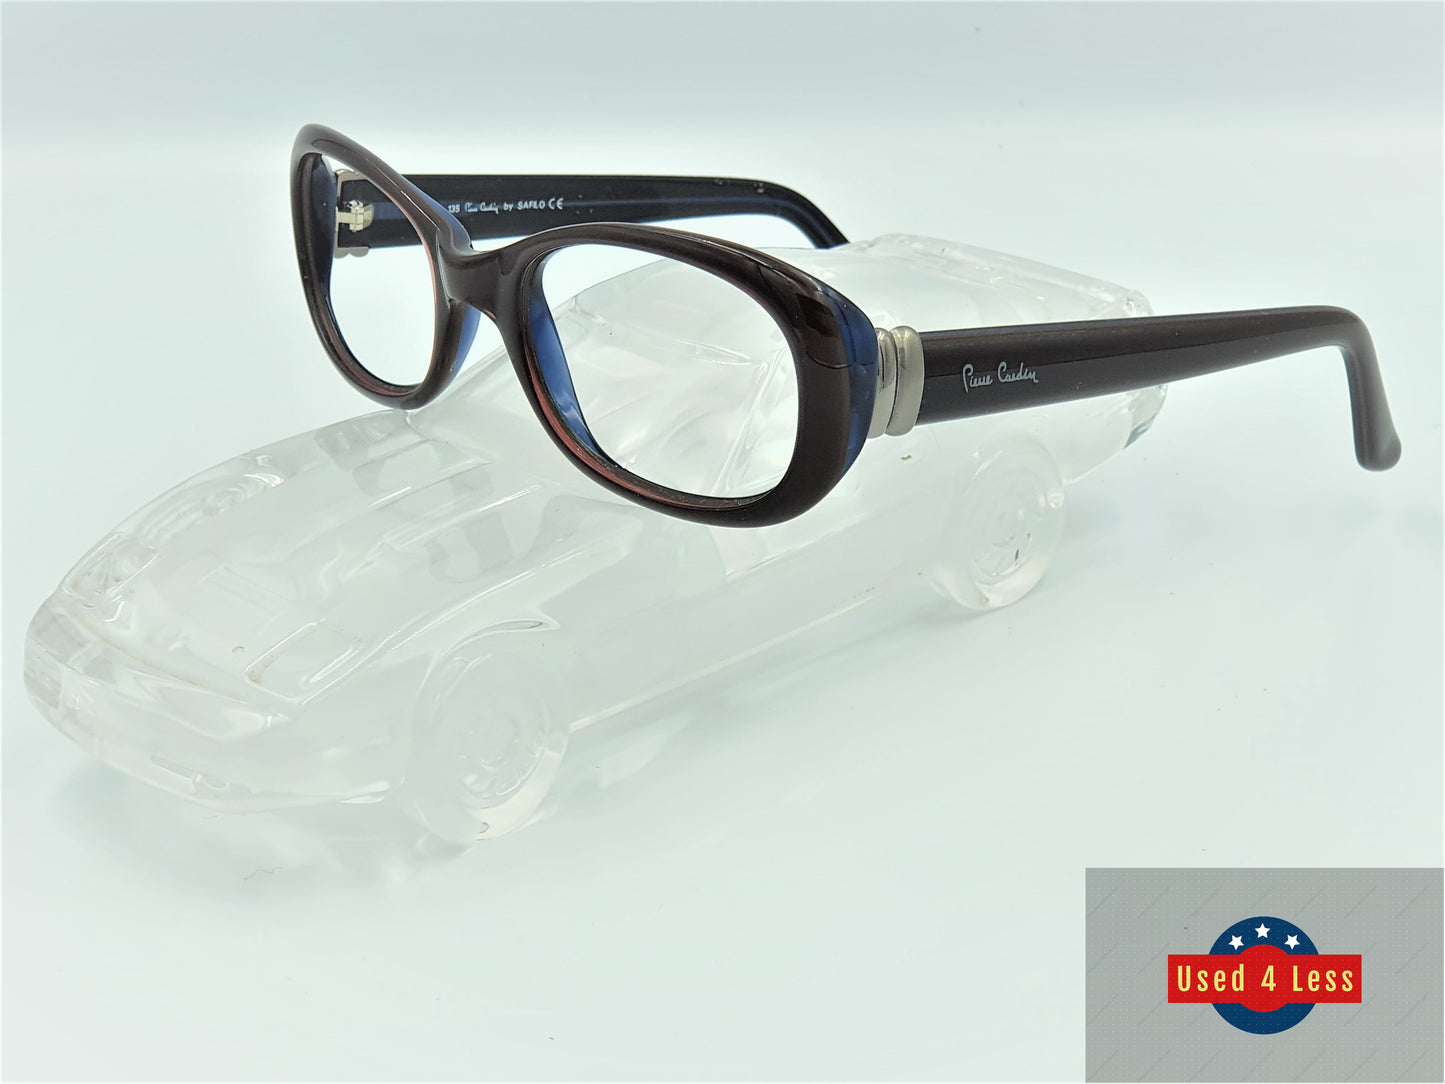 PIERRE CARDIN BY SAFILO glasses frame